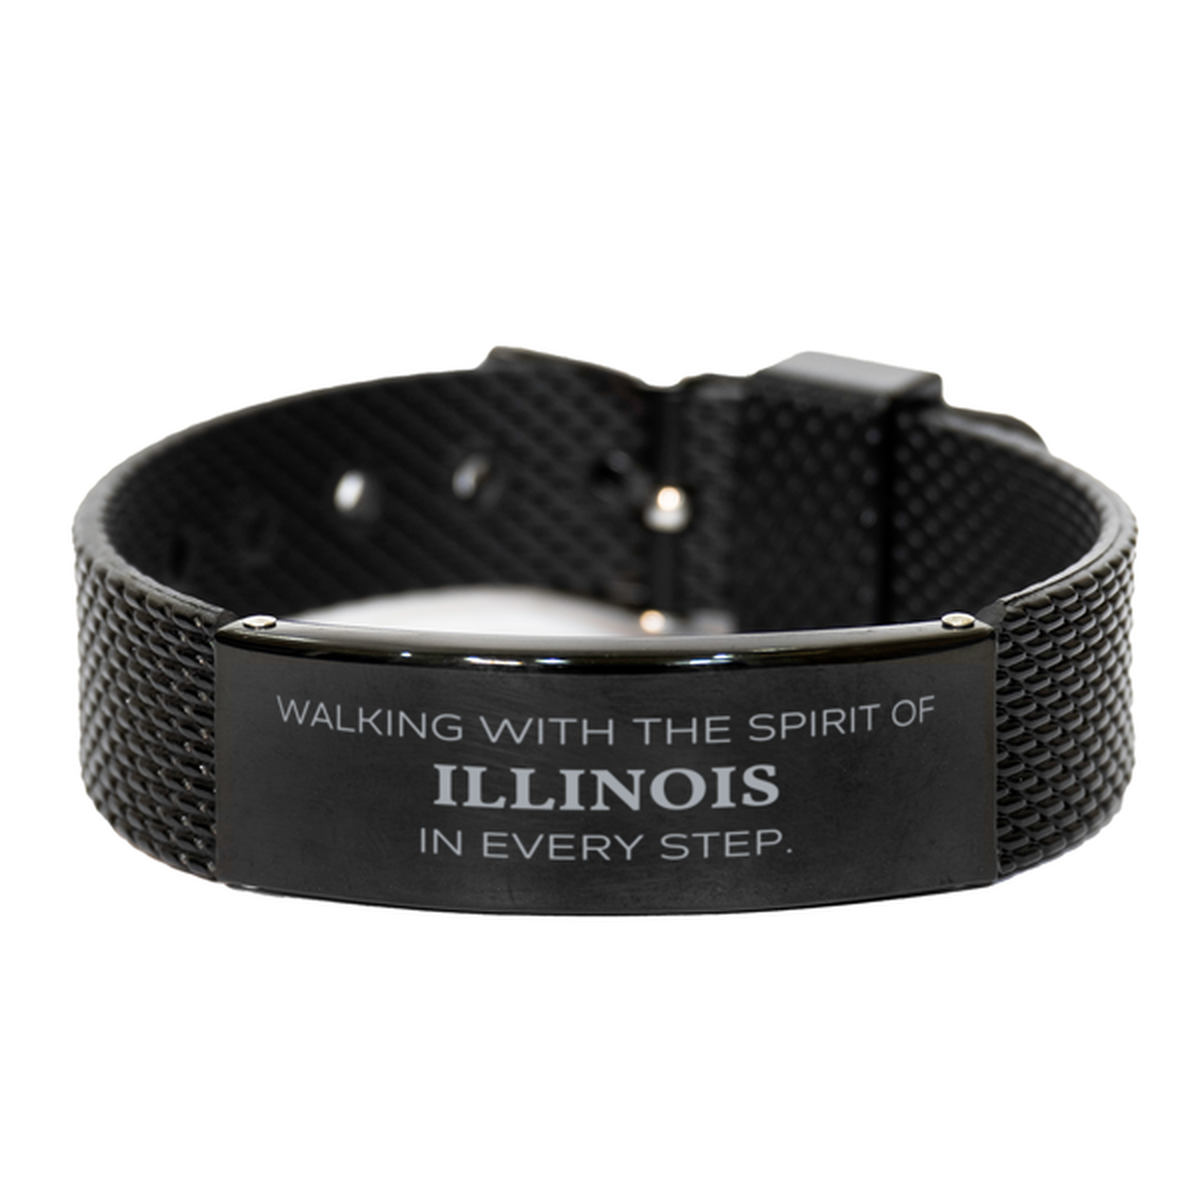 Illinois Gifts, Walking with the spirit, Love Illinois Birthday Christmas Black Shark Mesh Bracelet For Illinois People, Men, Women, Friends